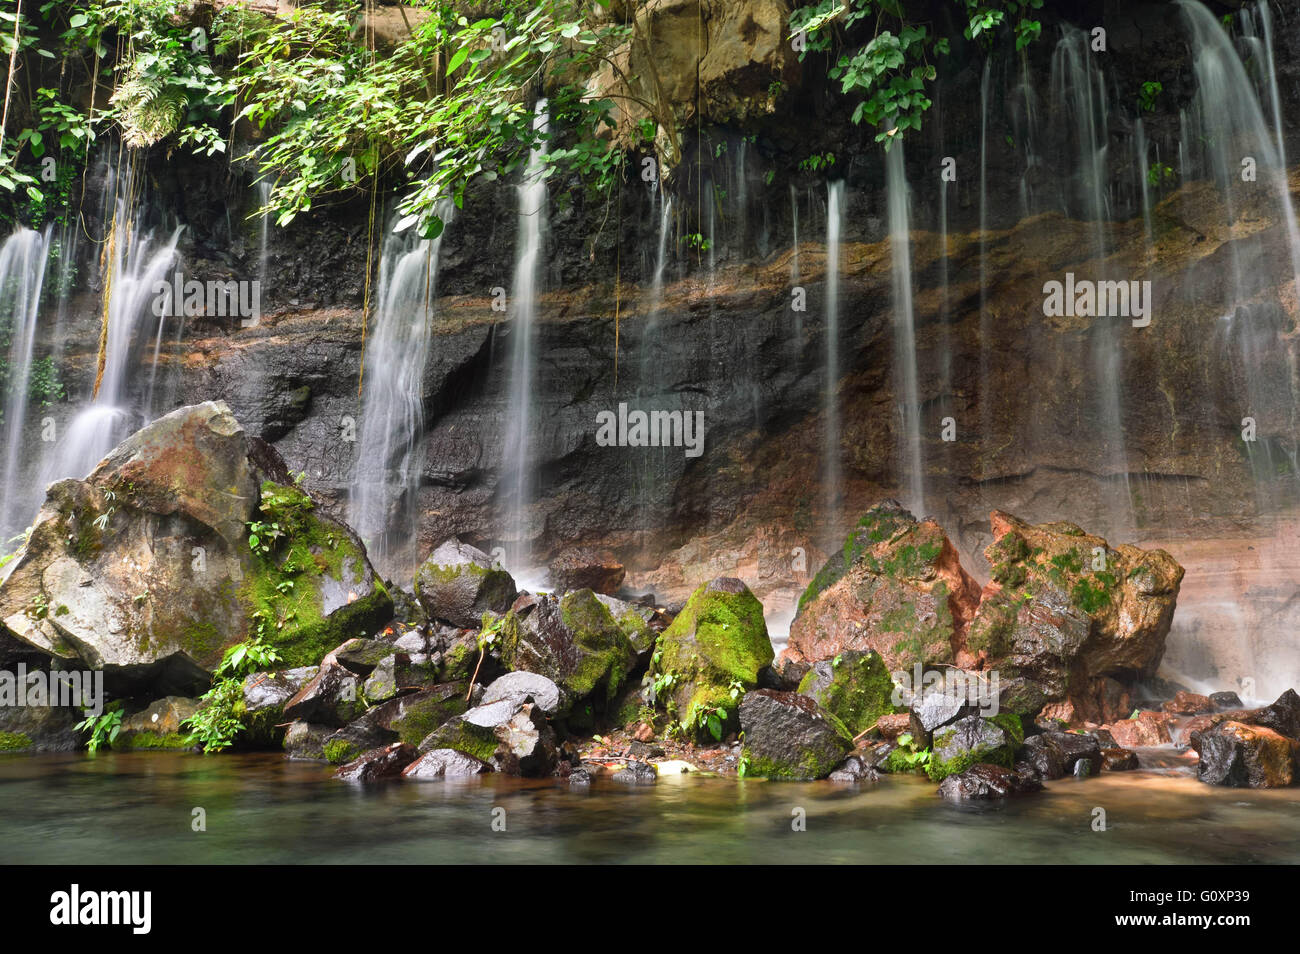 Chorros De La Calera Wasserfälle in einer kleinen Stadt von Juayua, El Salvador Stockfoto